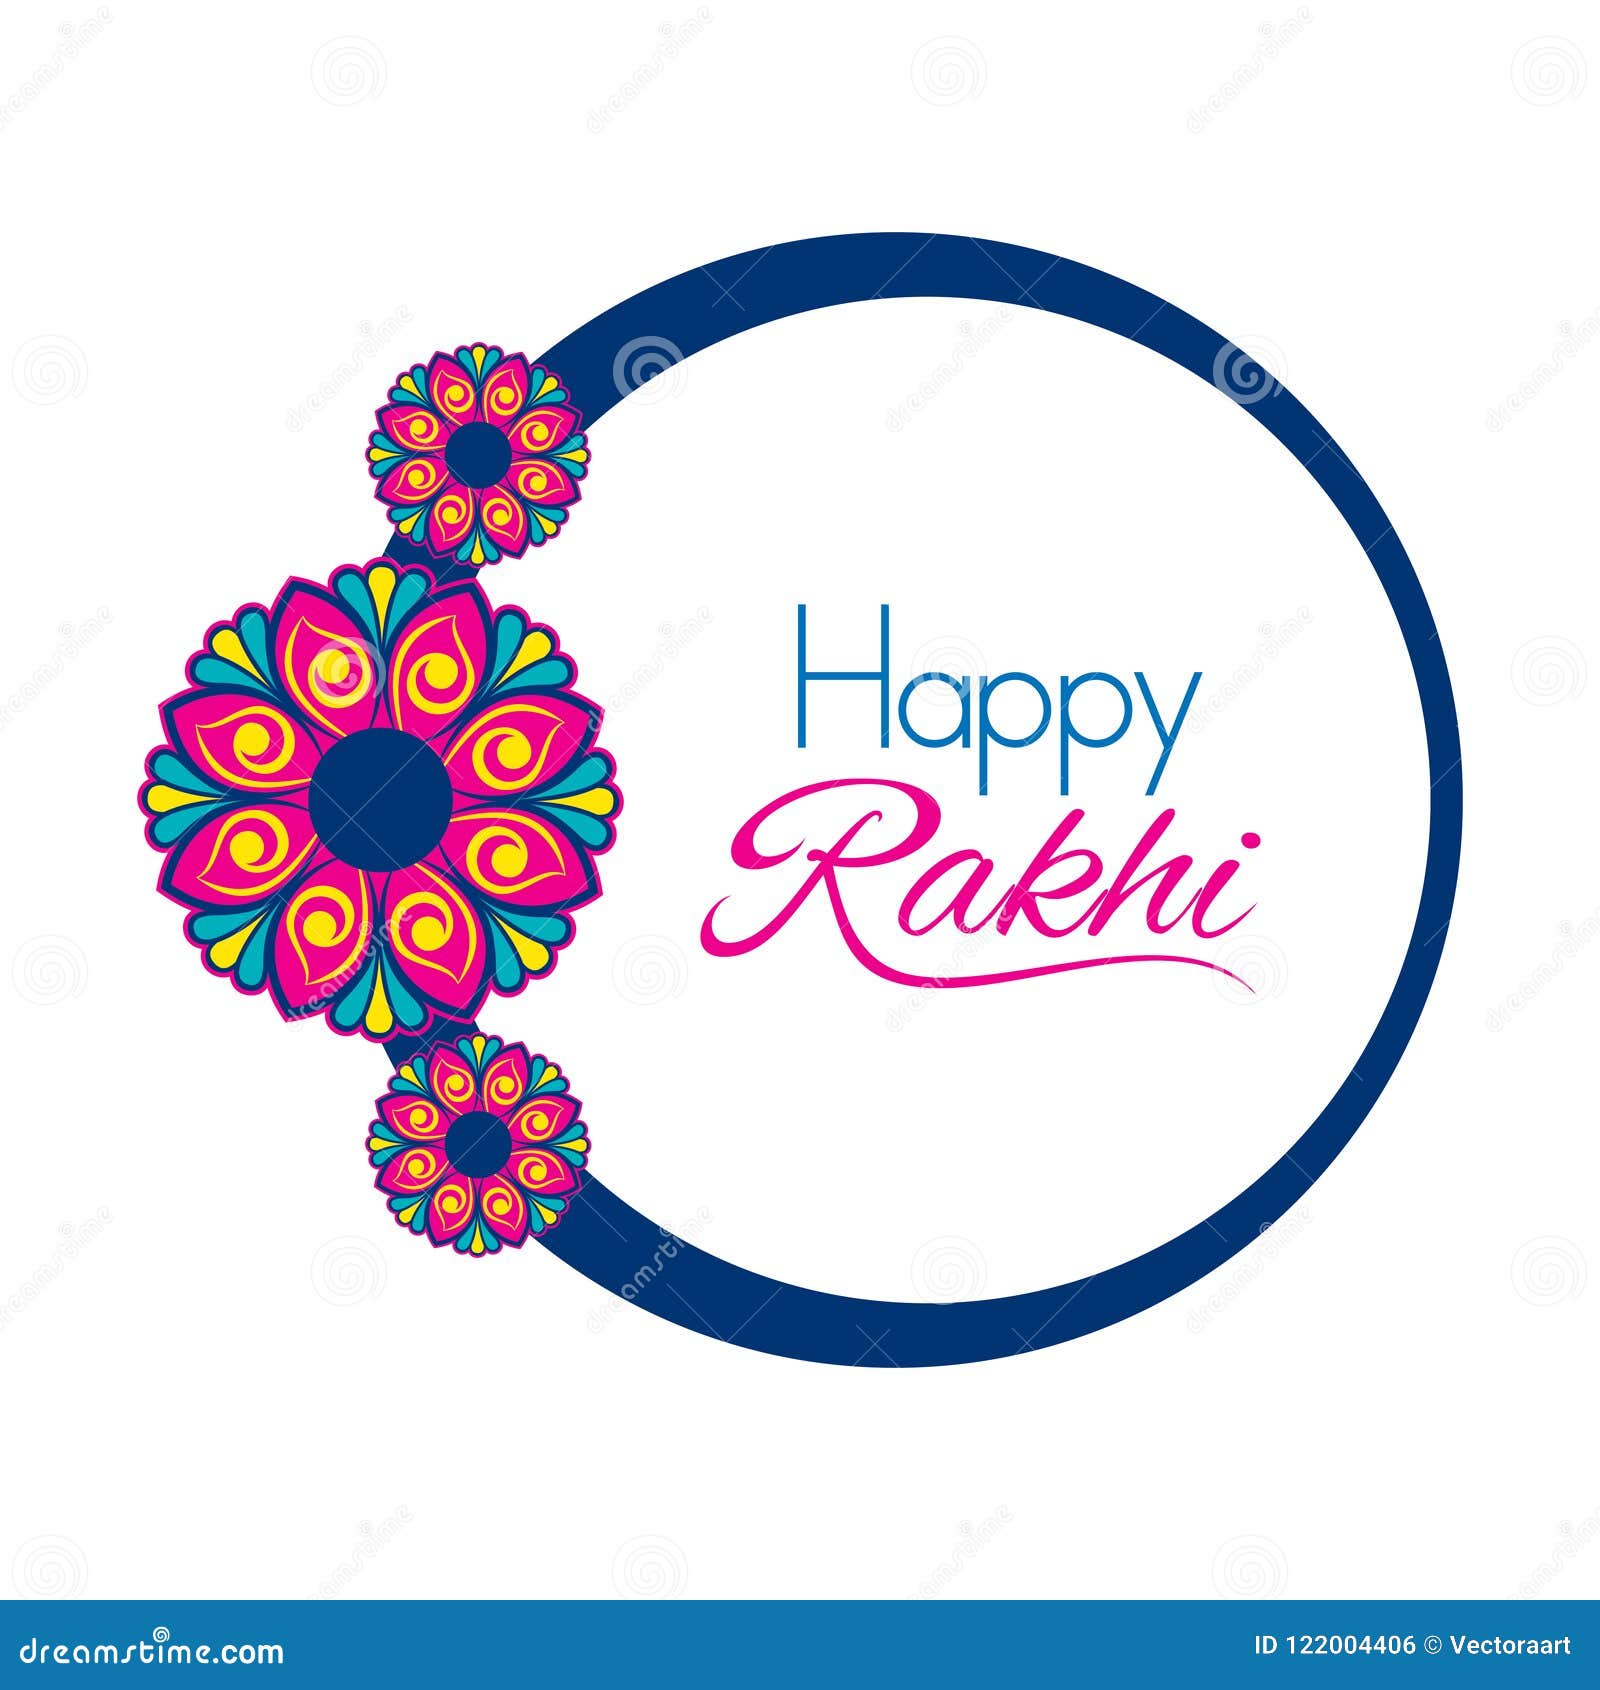 Decorative Happy Rakhi Festival Greeting Card Design Stock Vector ...